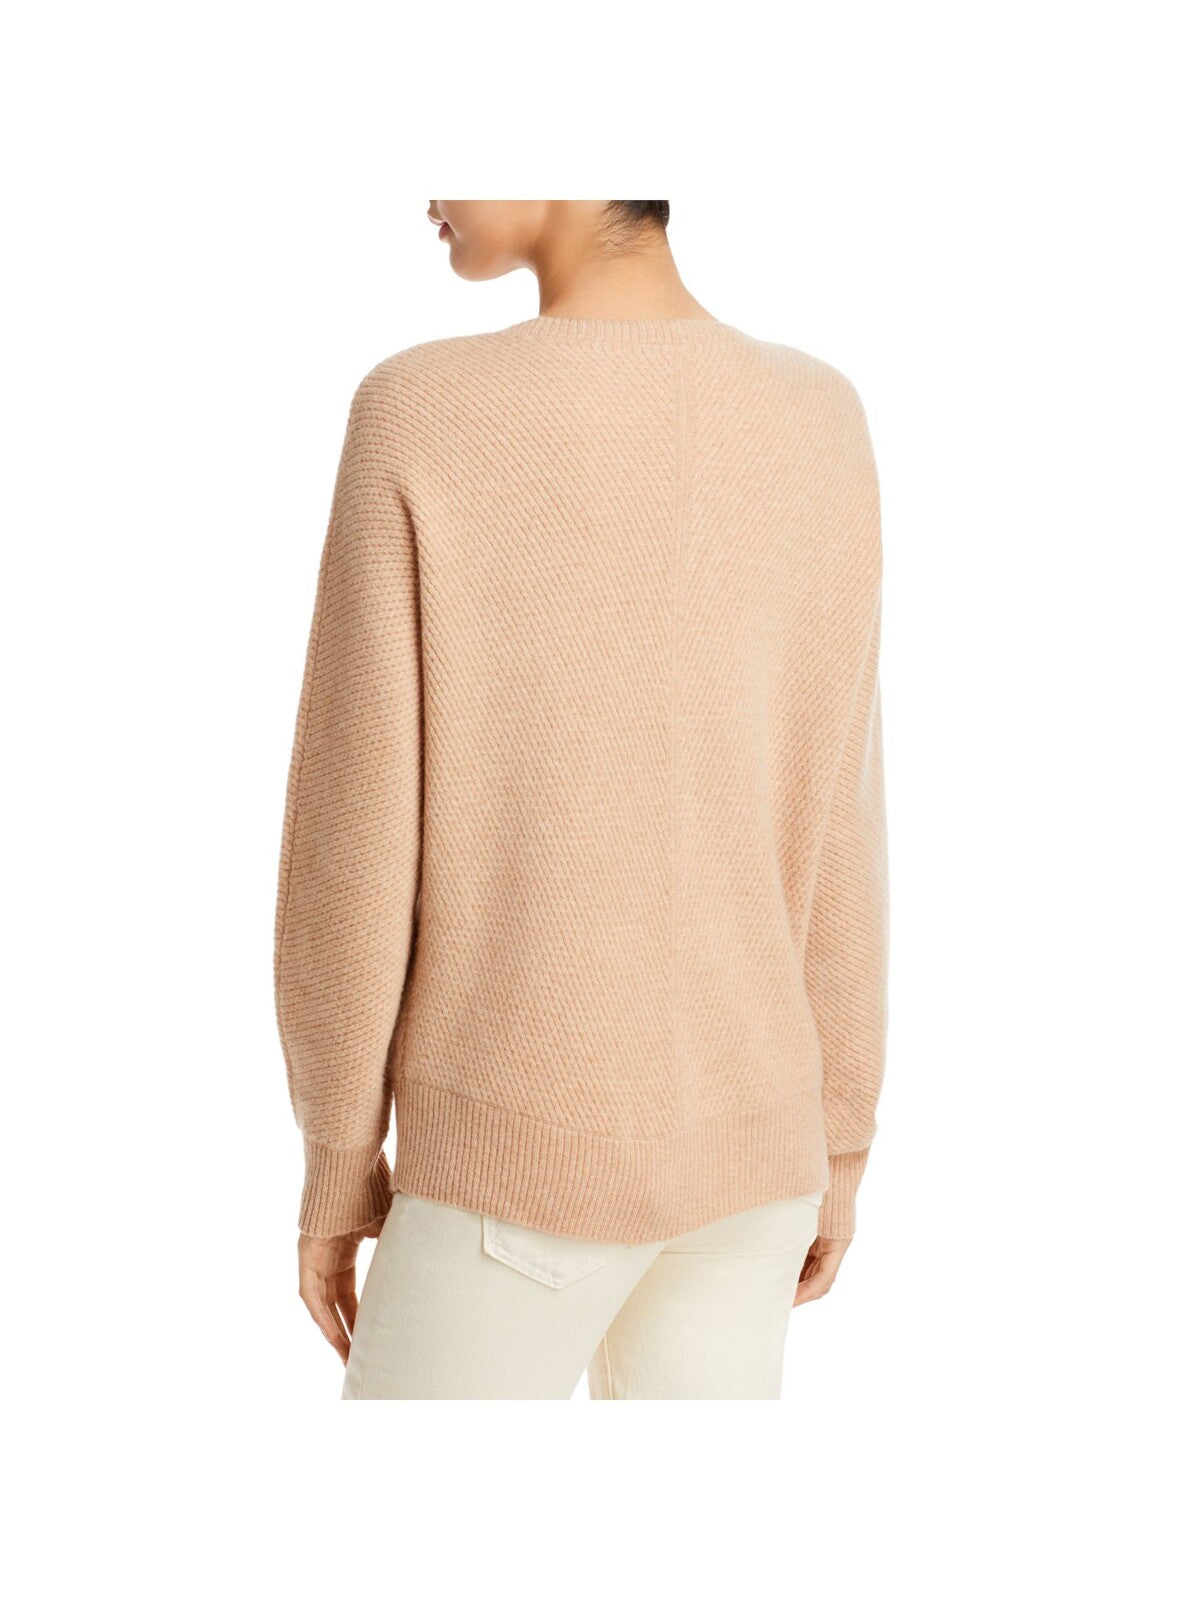 Designer Brand Womens Beige Ribbed Novelty Stitch Long Sleeve Scoop Neck Sweater S